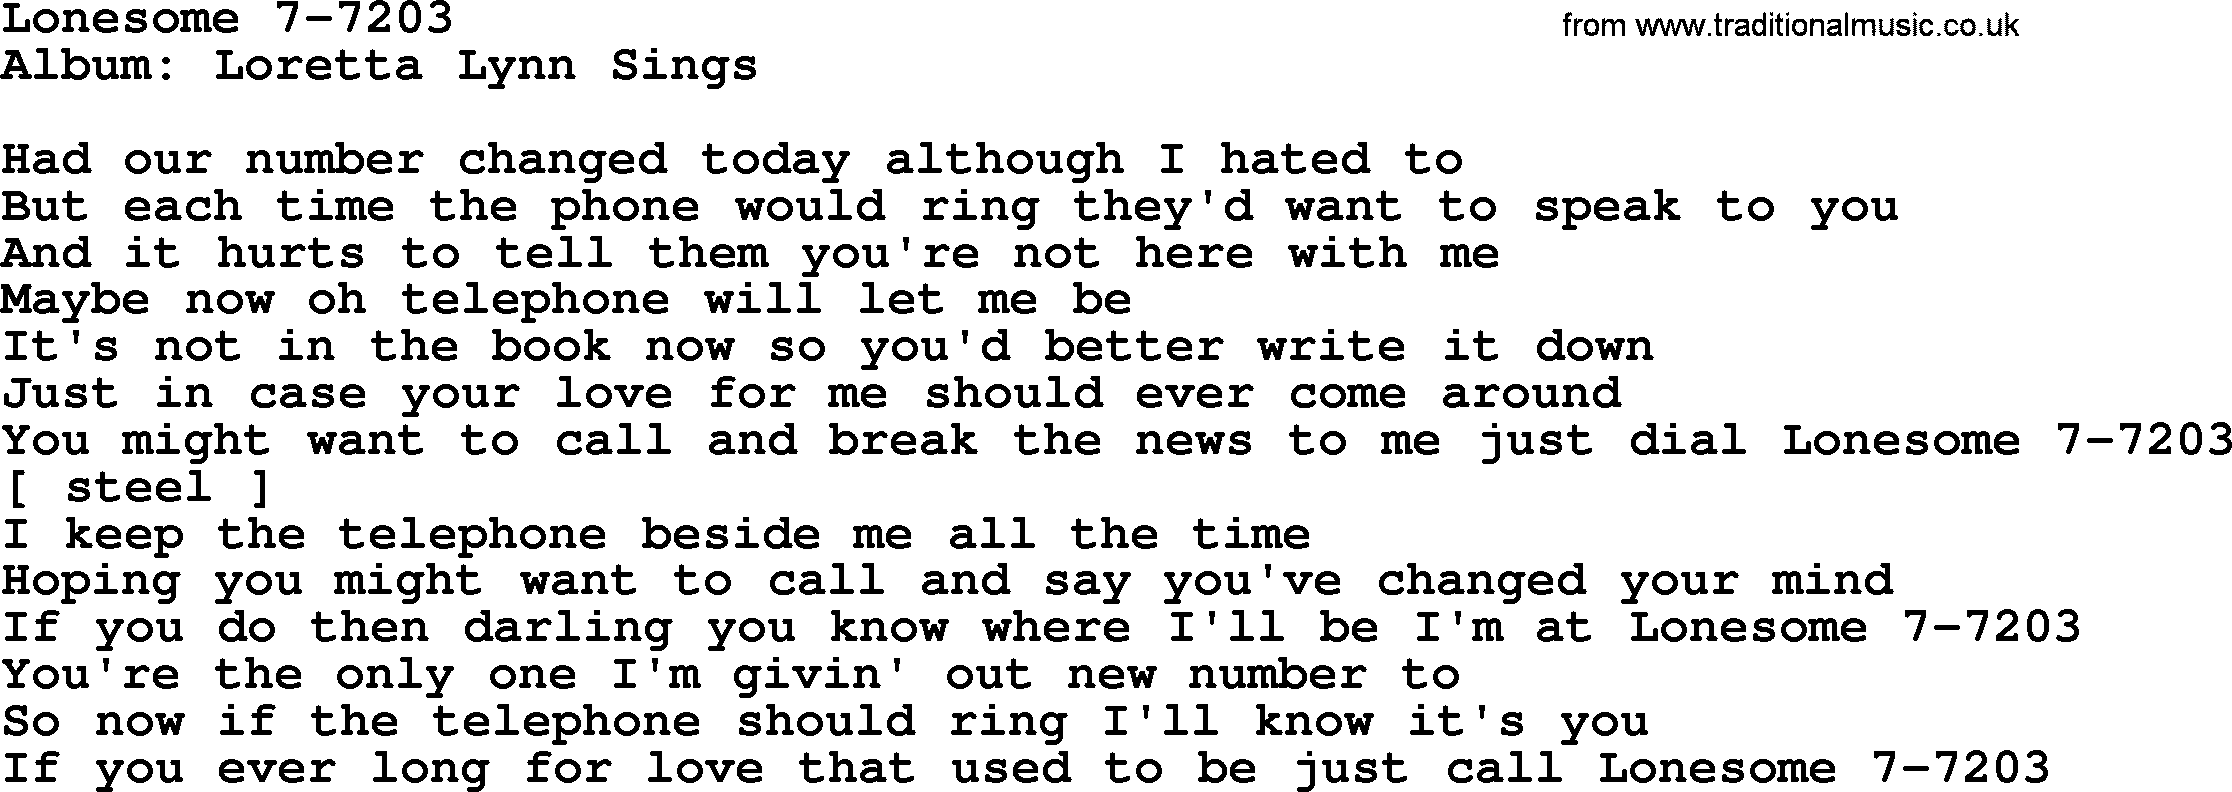 Loretta Lynn song: Lonesome 7-7203 lyrics